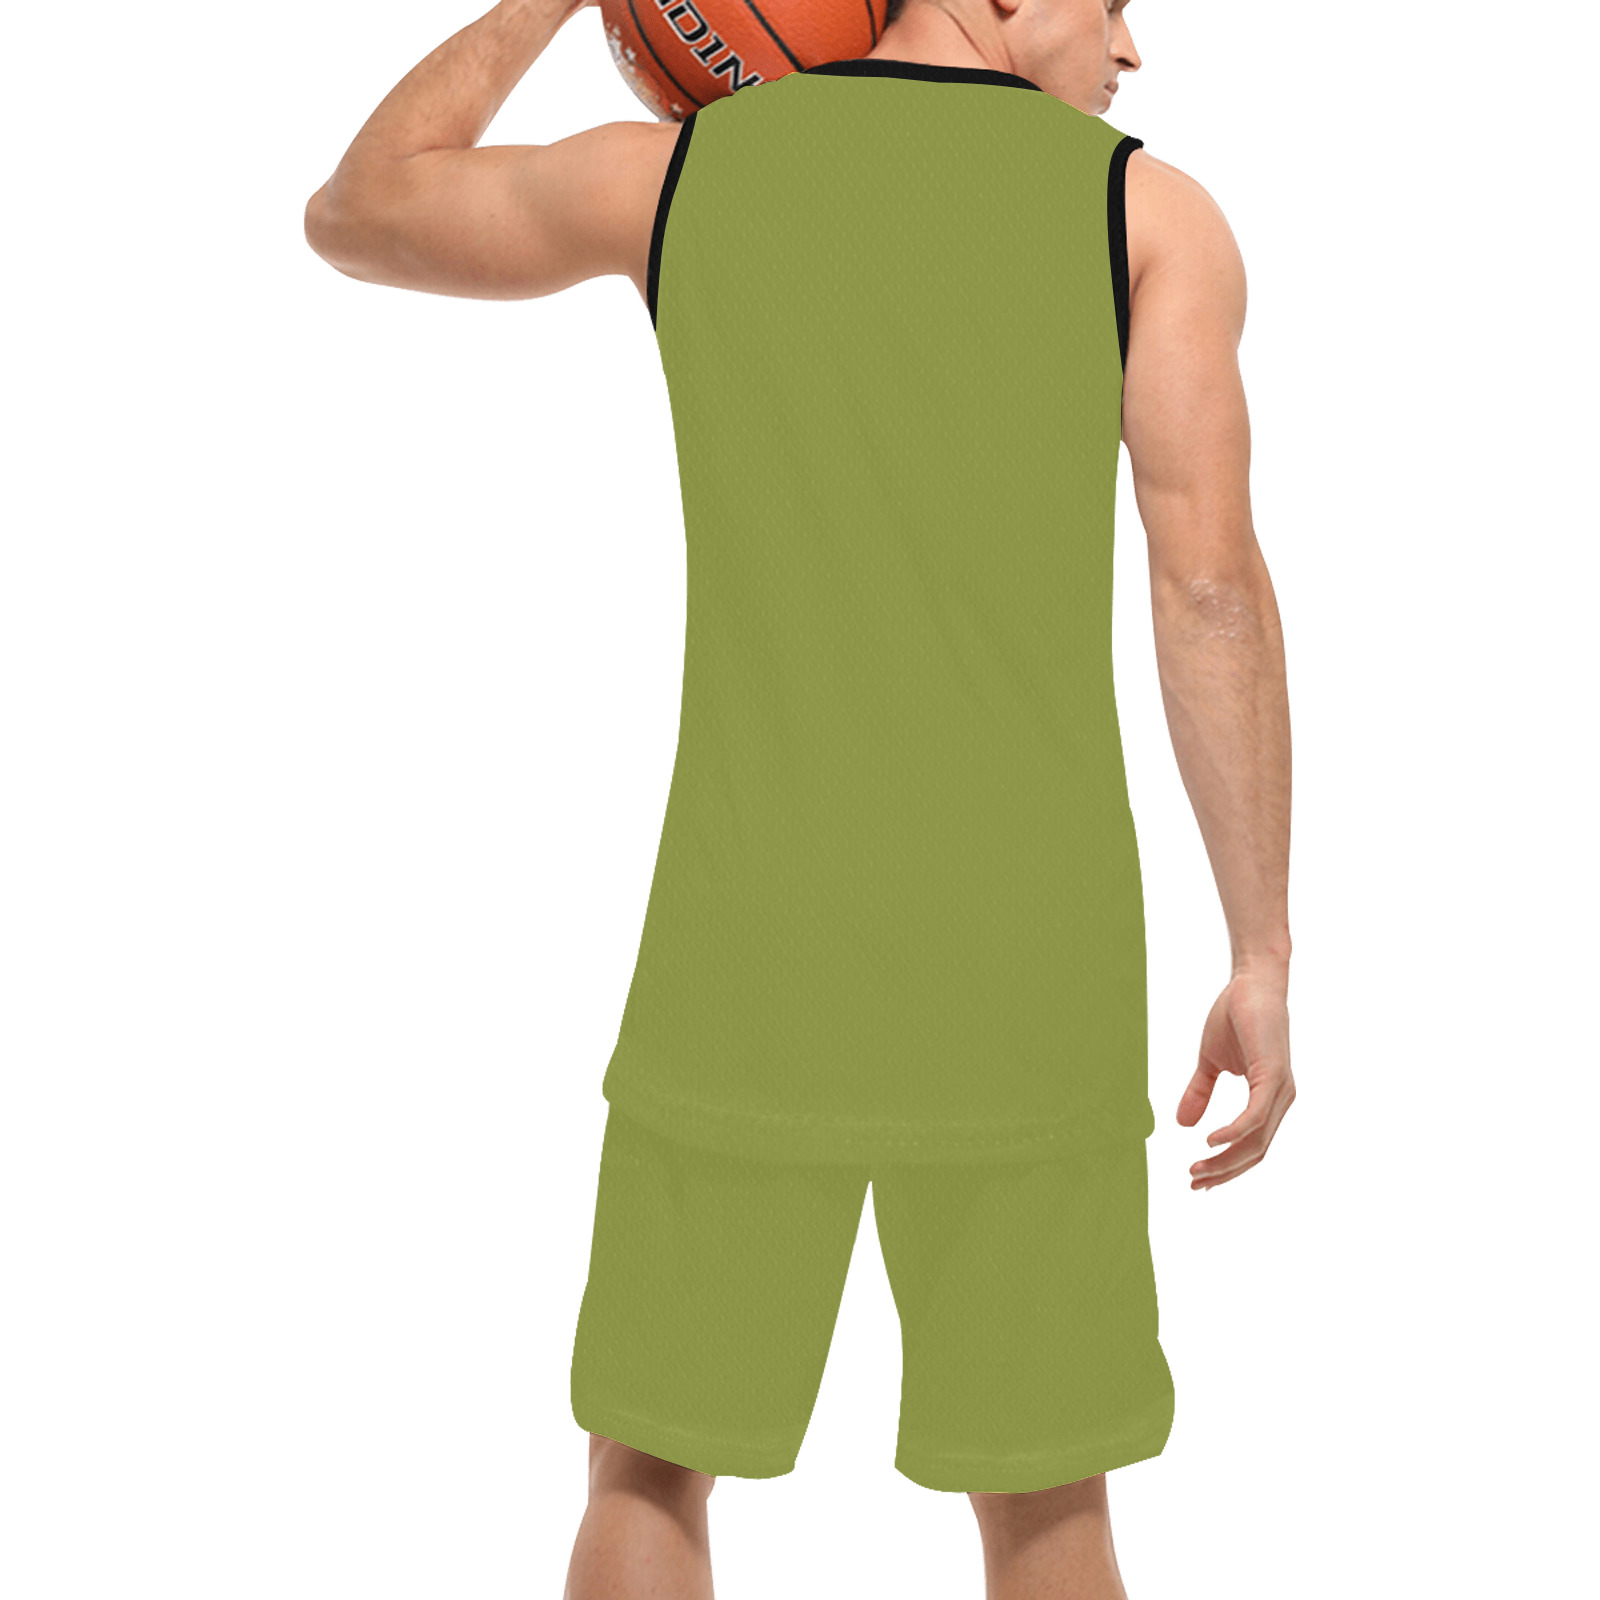 green Basketball Uniform with Pocket